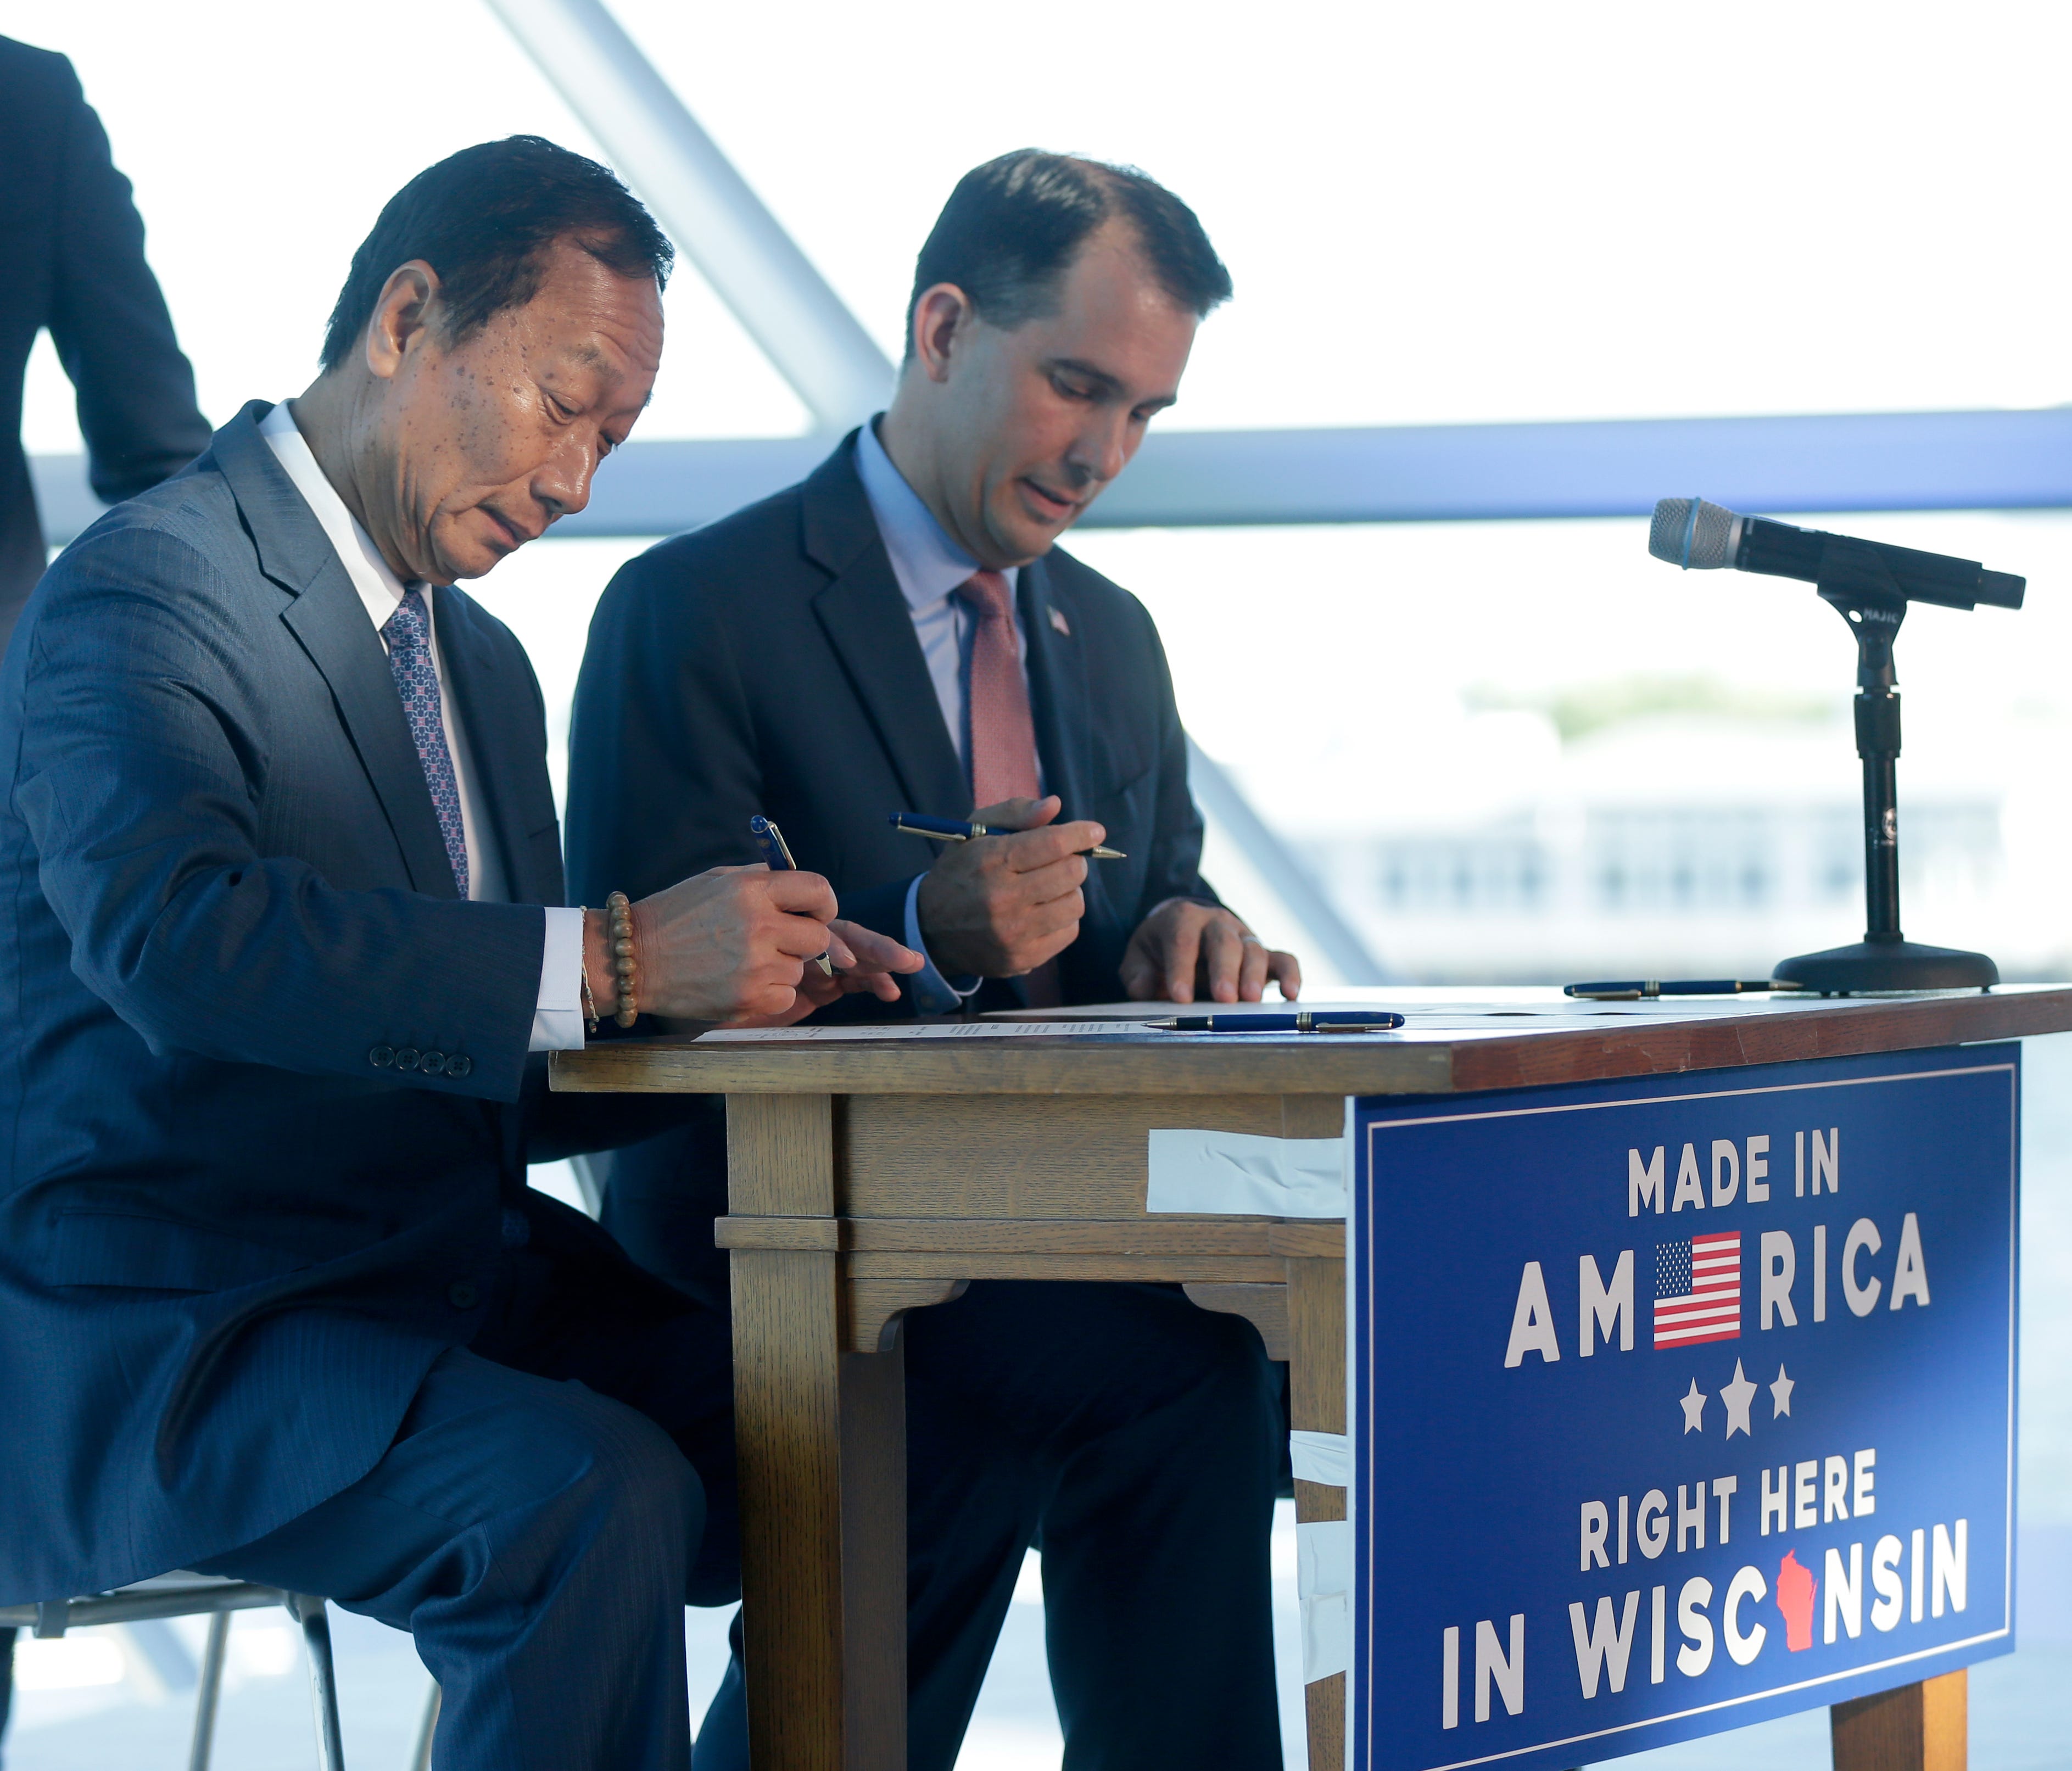 Foxconn Chairman Terry Gou (left) and Gov. Scott Walker sign a memorandum of understanding regarding Foxconn's plan to build a $10 billion factory in Wisconsin.